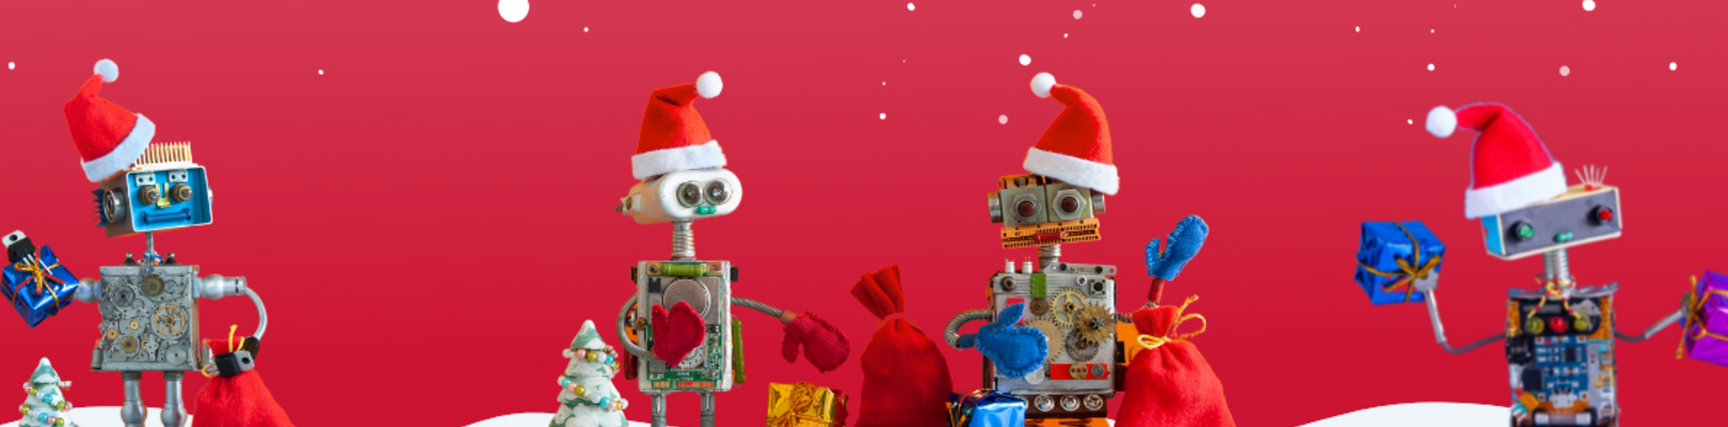 Robots wearing Christmas hats